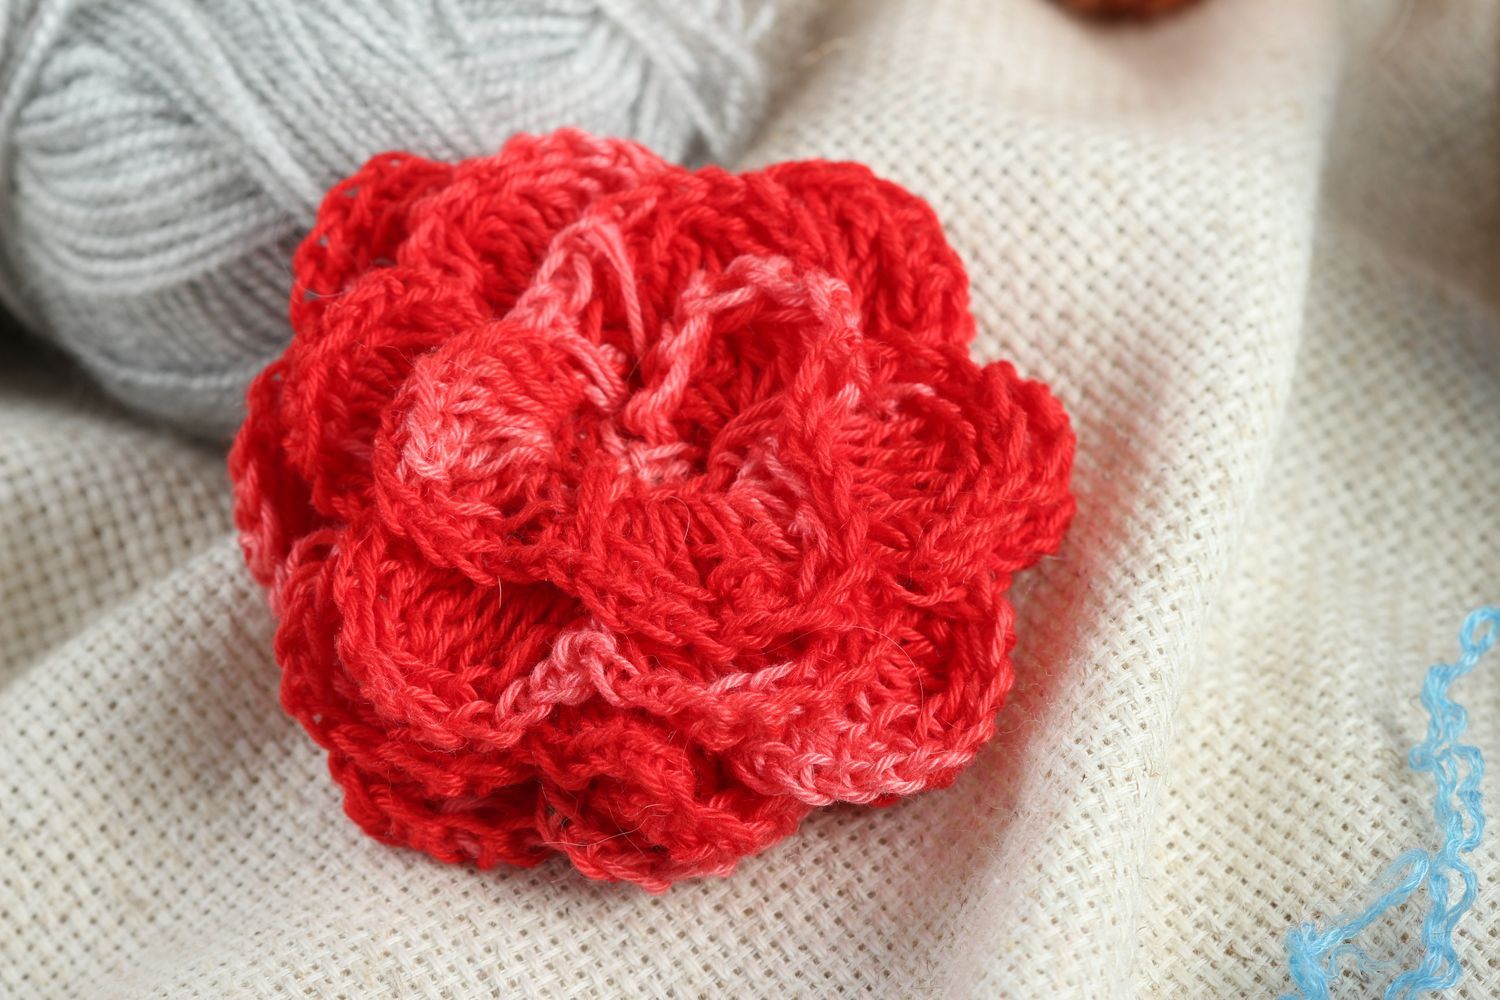 Handmade crocheted flower decorative flowers crochet ideas homemade crafts photo 1